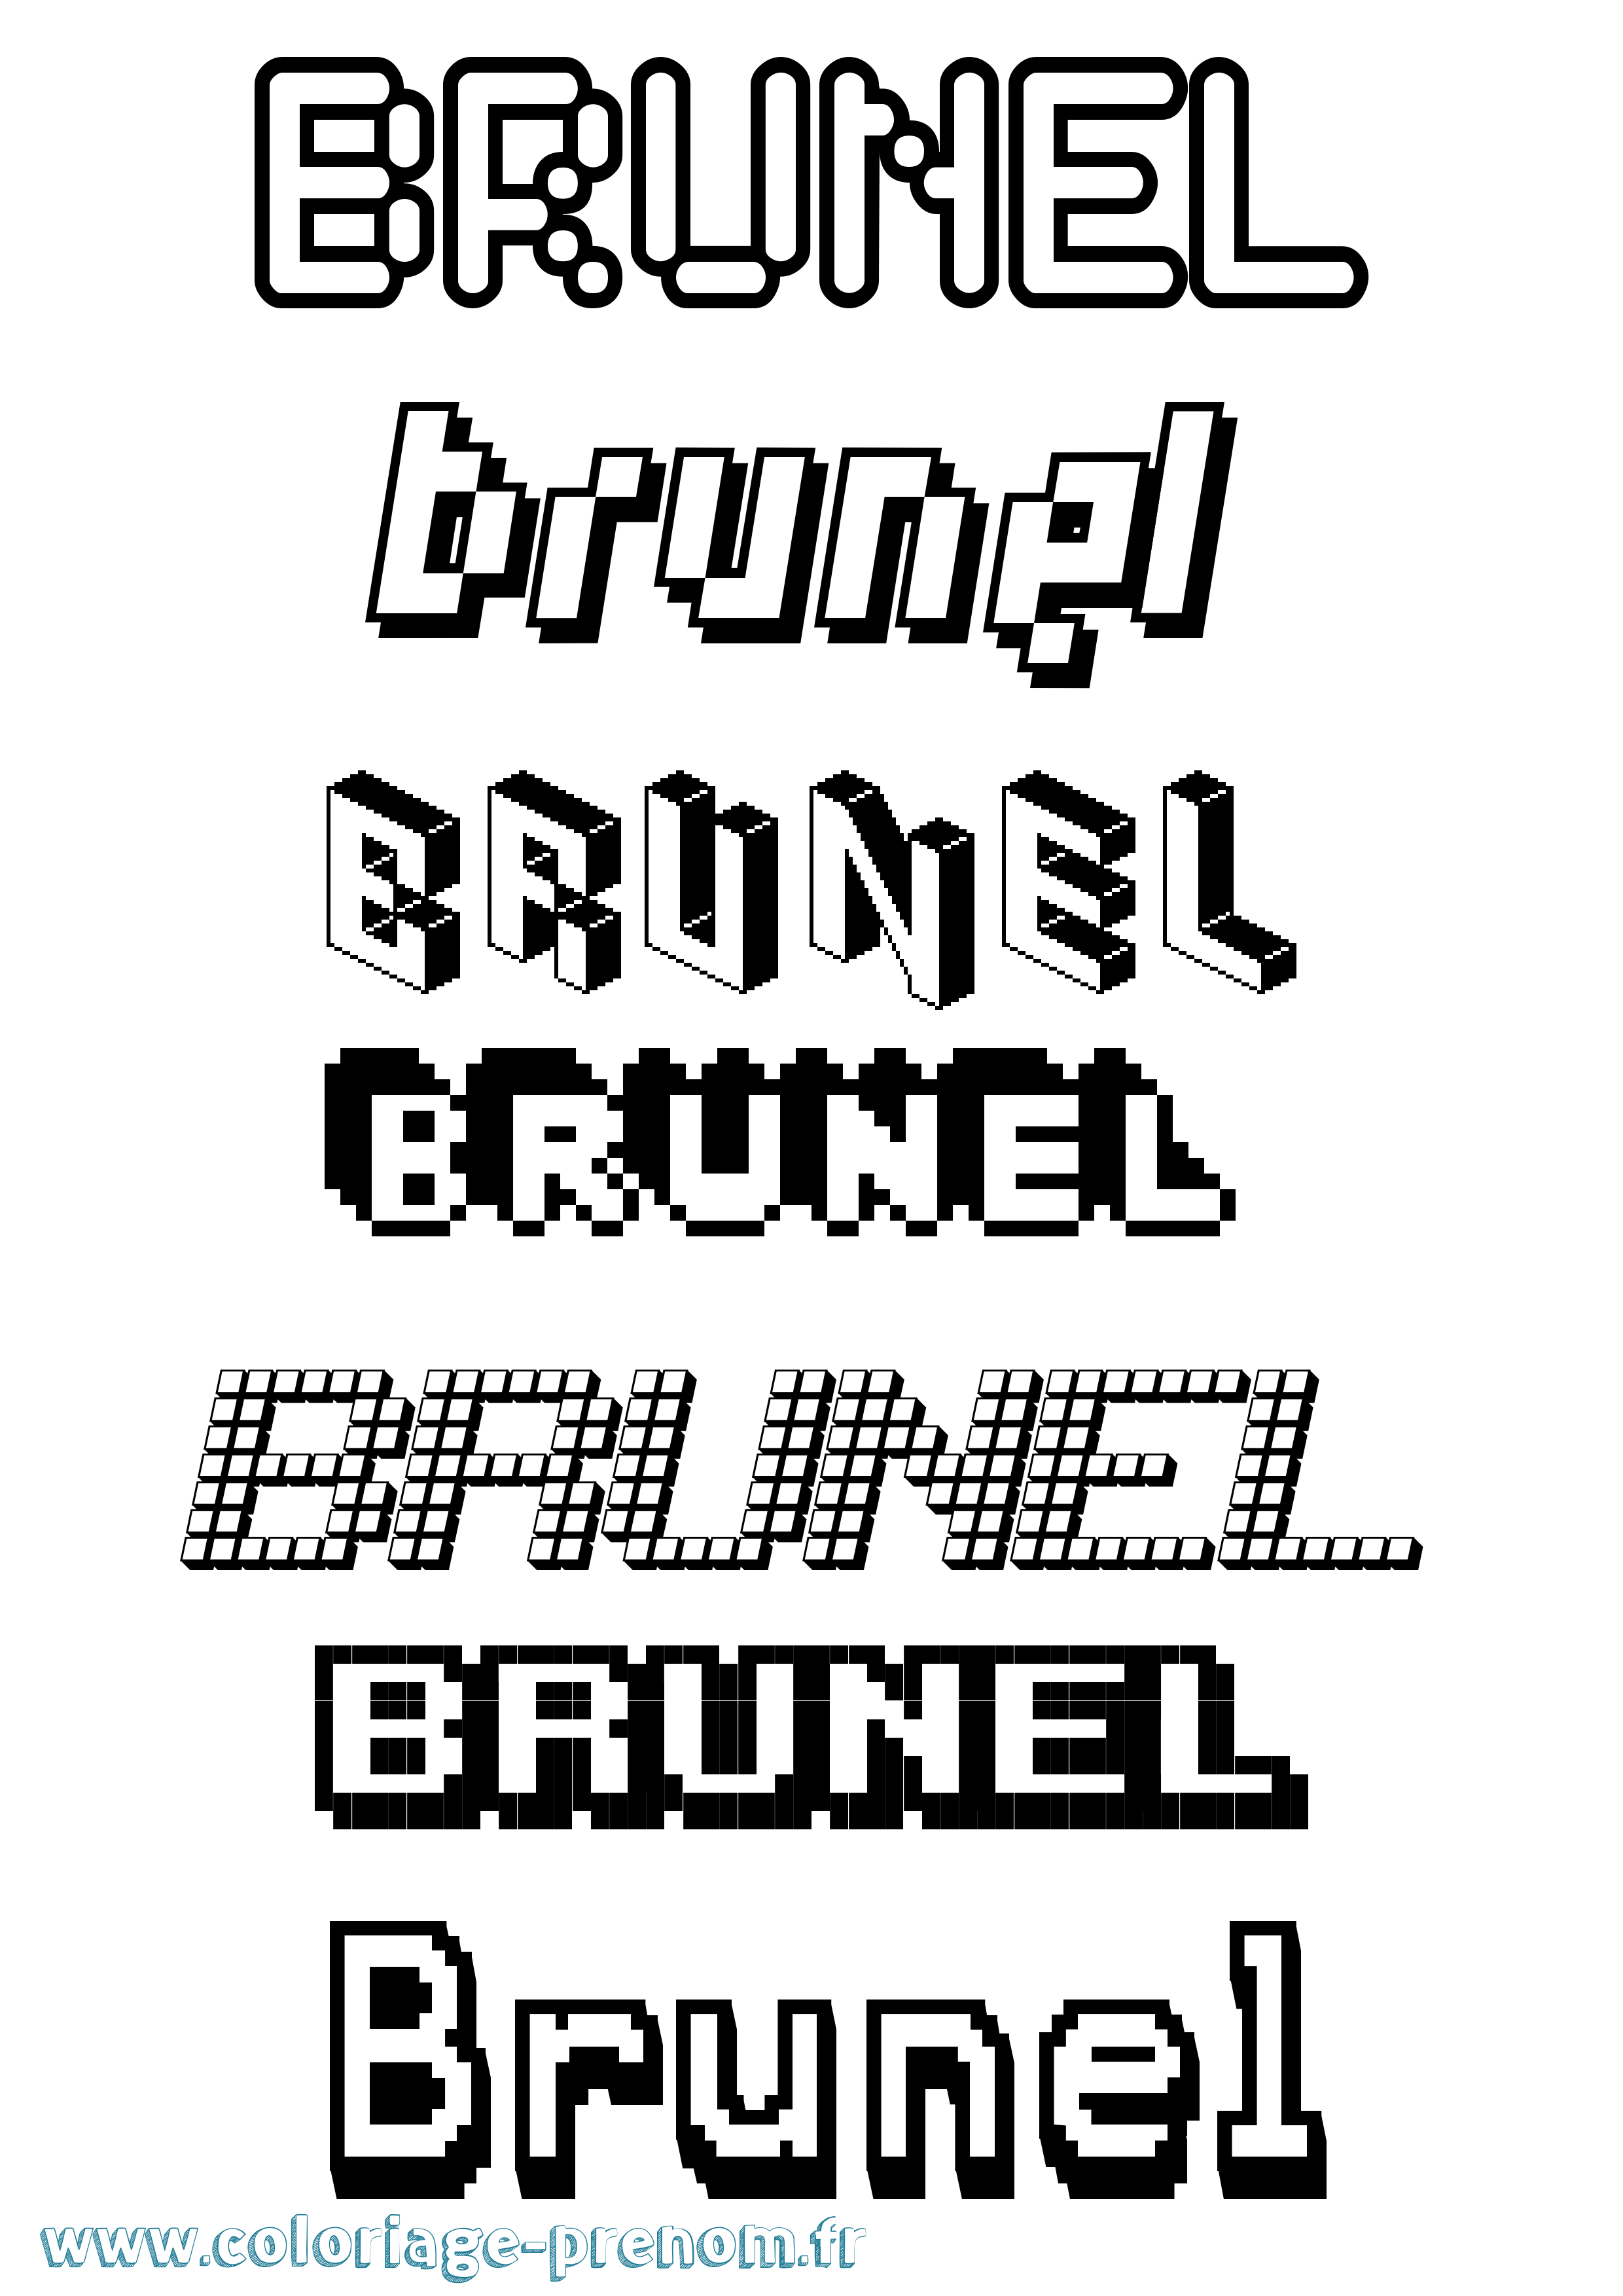 Coloriage prénom Brunel Pixel